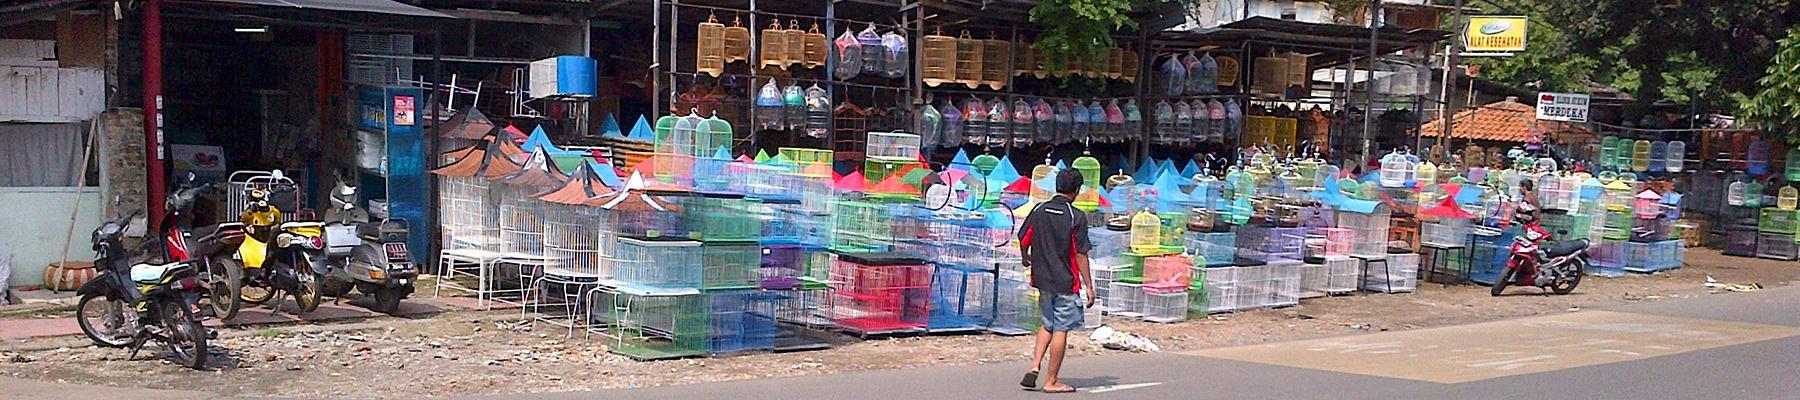 Rows of cages at a stall just outside Pramuka market, Jakarta © Kanitha Krishnasamy / TRAFFIC